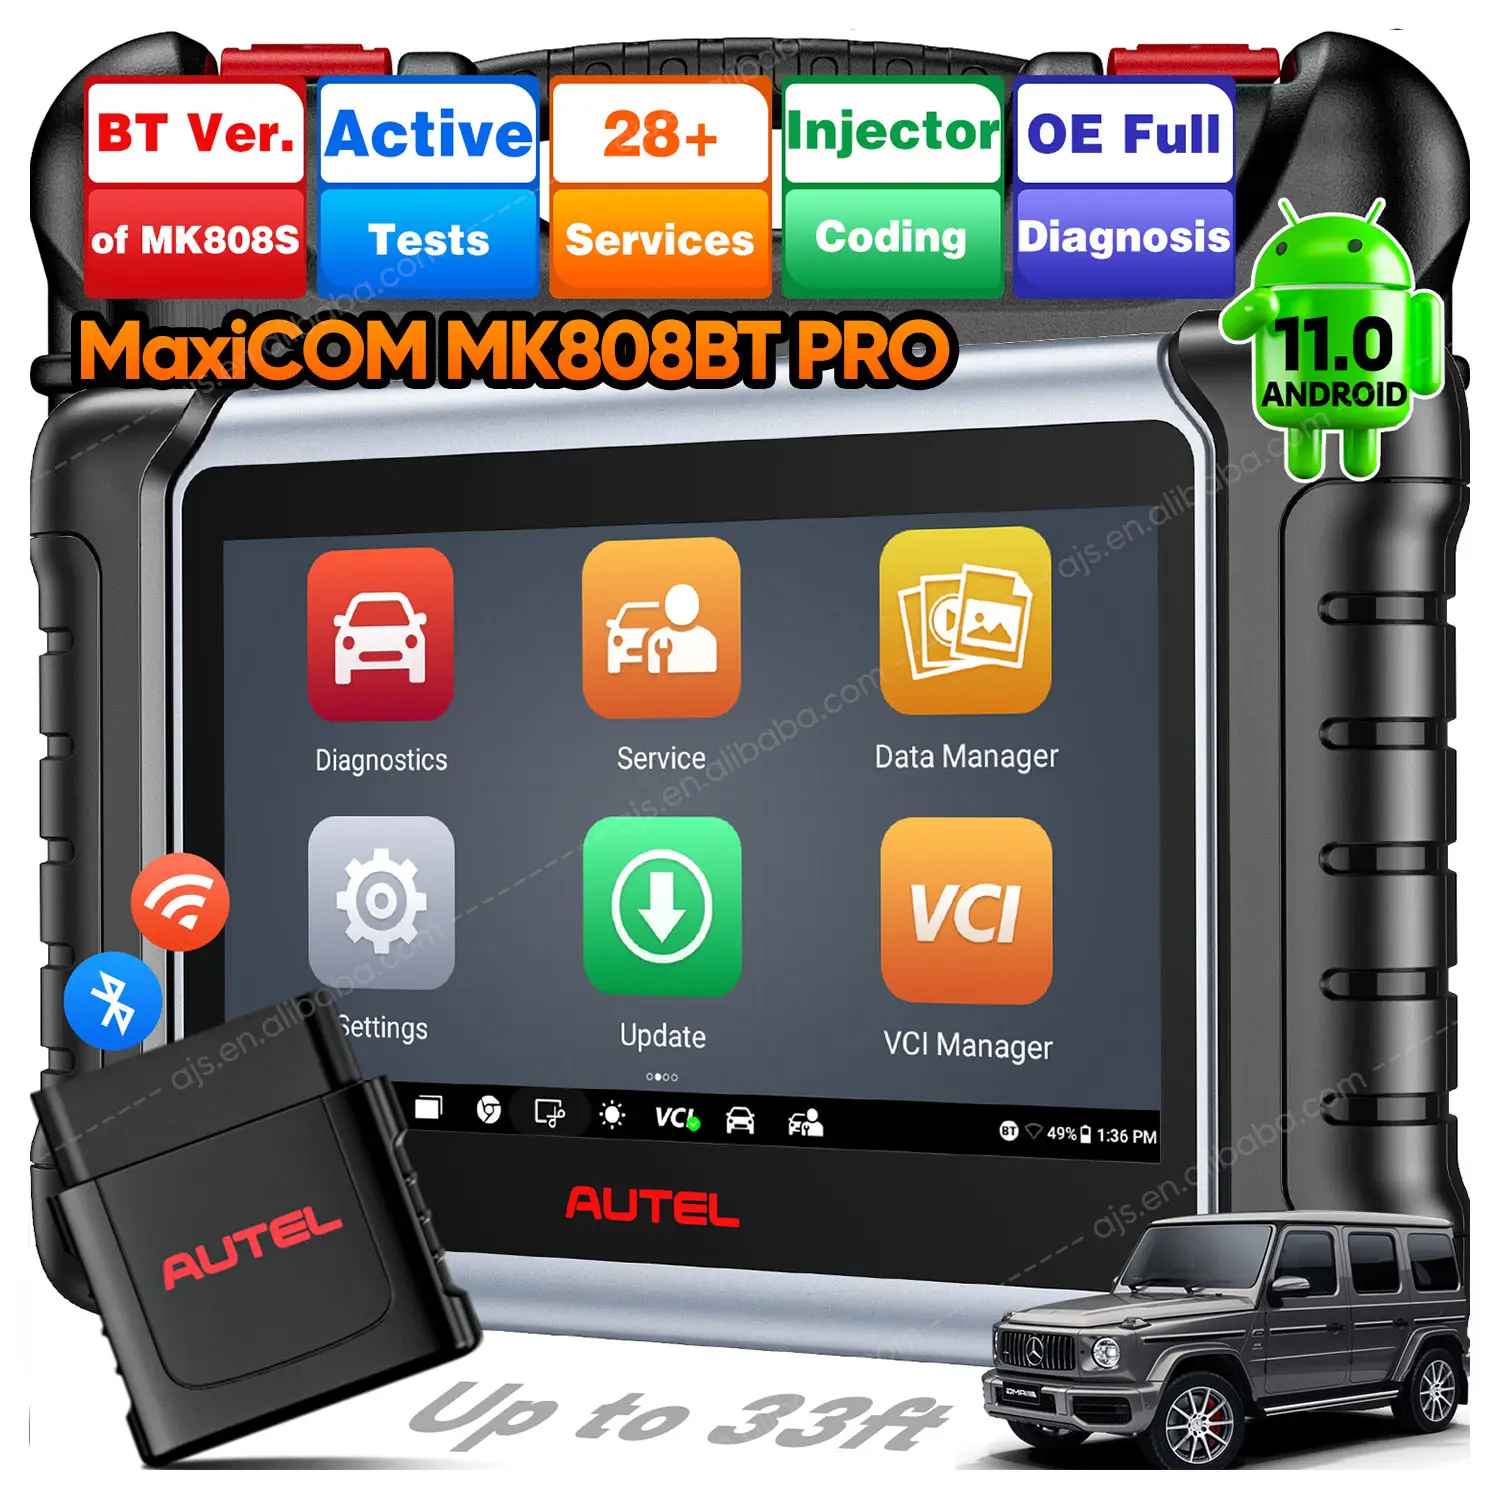 Autel MaxiCOM MK808BT PRO 28+ Services All Systems OBD2 Car Scanner Diagnostic Tool Level-up of MK808BT MK808 MK808S MX808